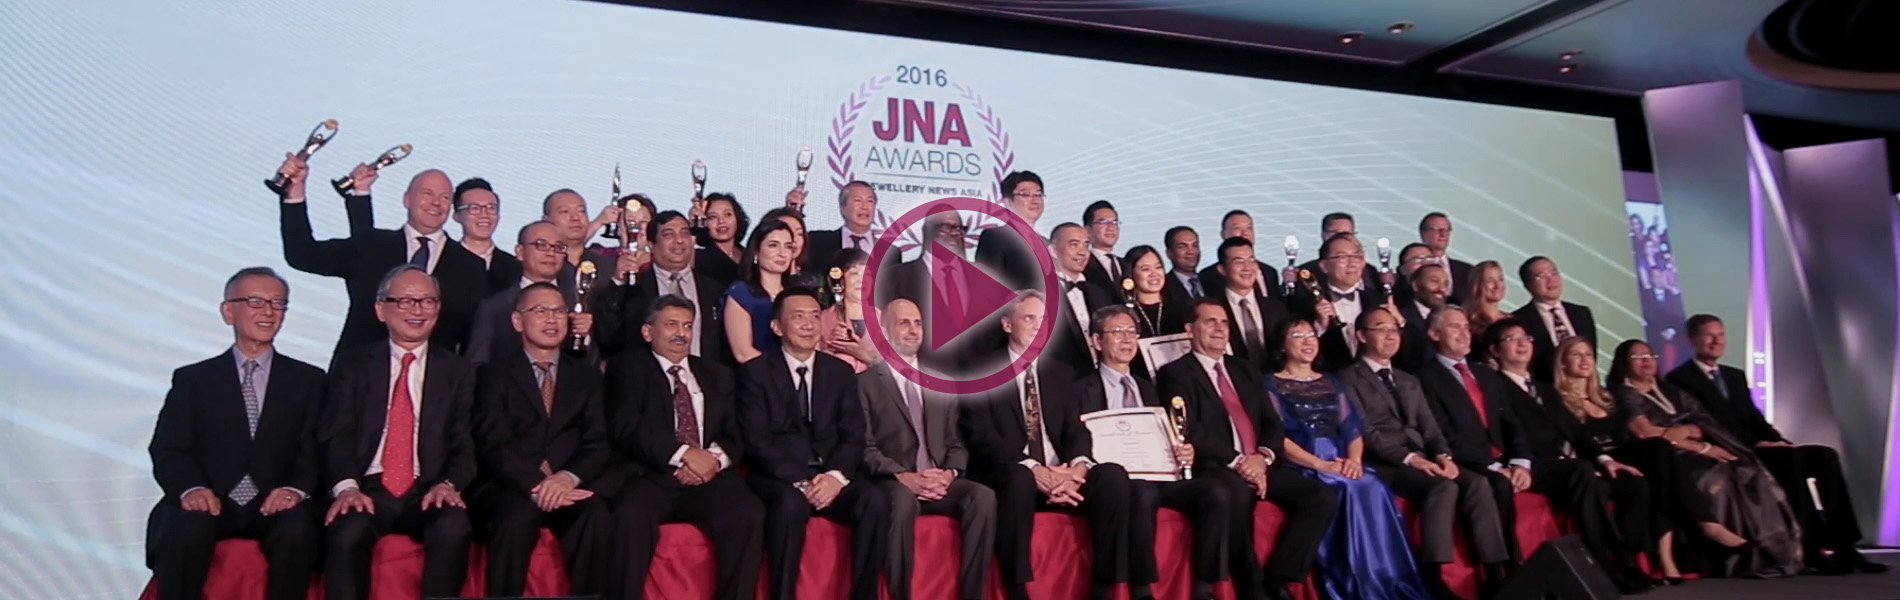 JNA Awards 2016 ceremony video highlights